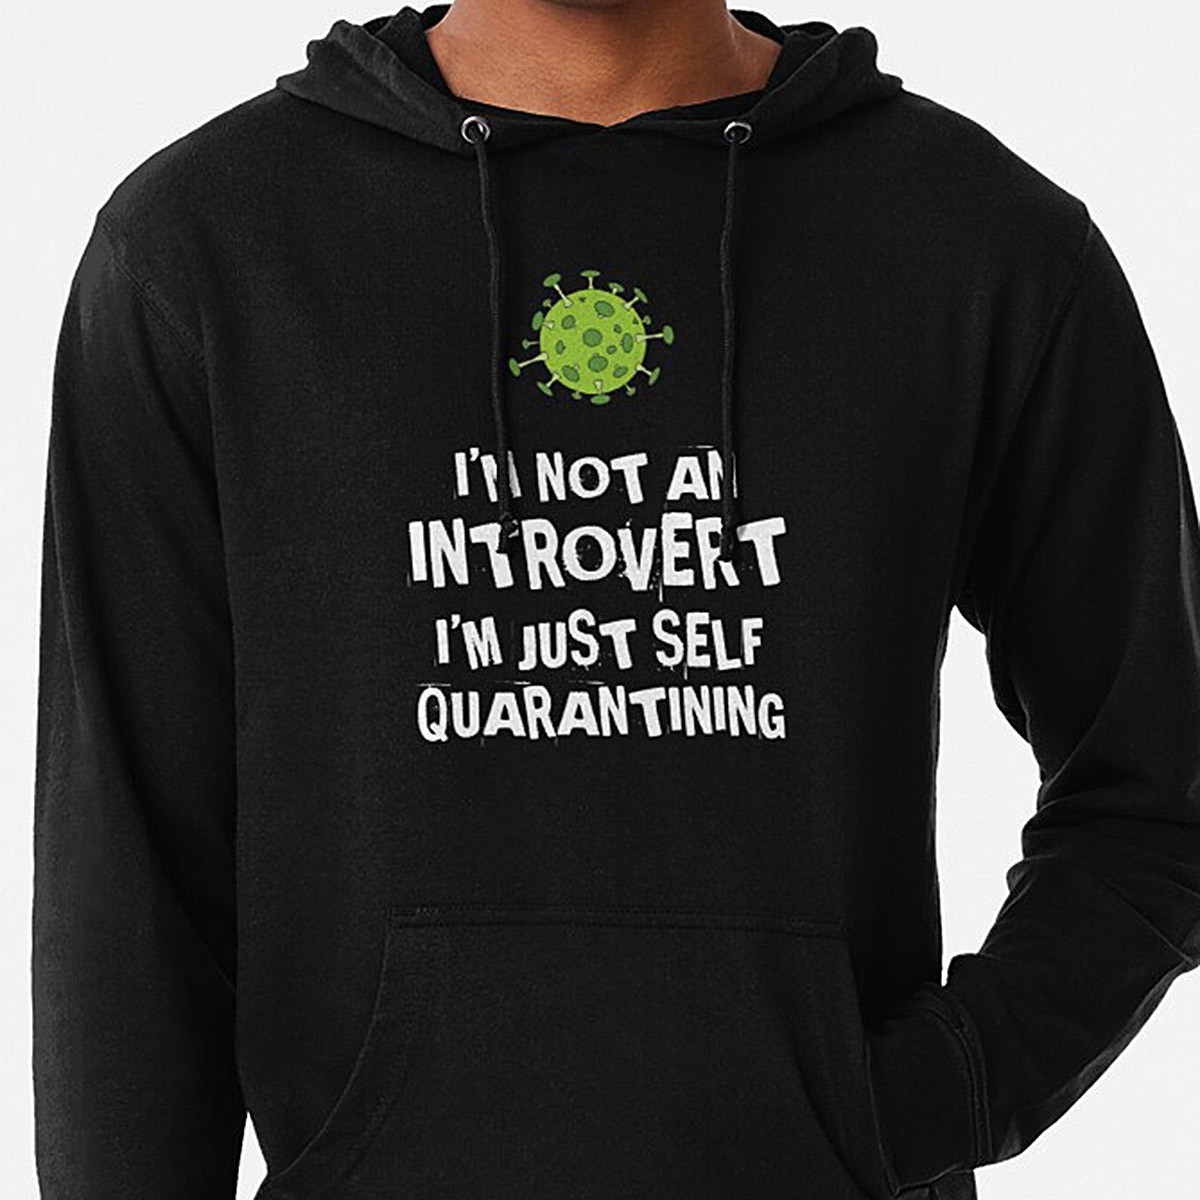 Not an Introvert - Just Self Quarantining! Lightweight Hoodie by NTK Apparel